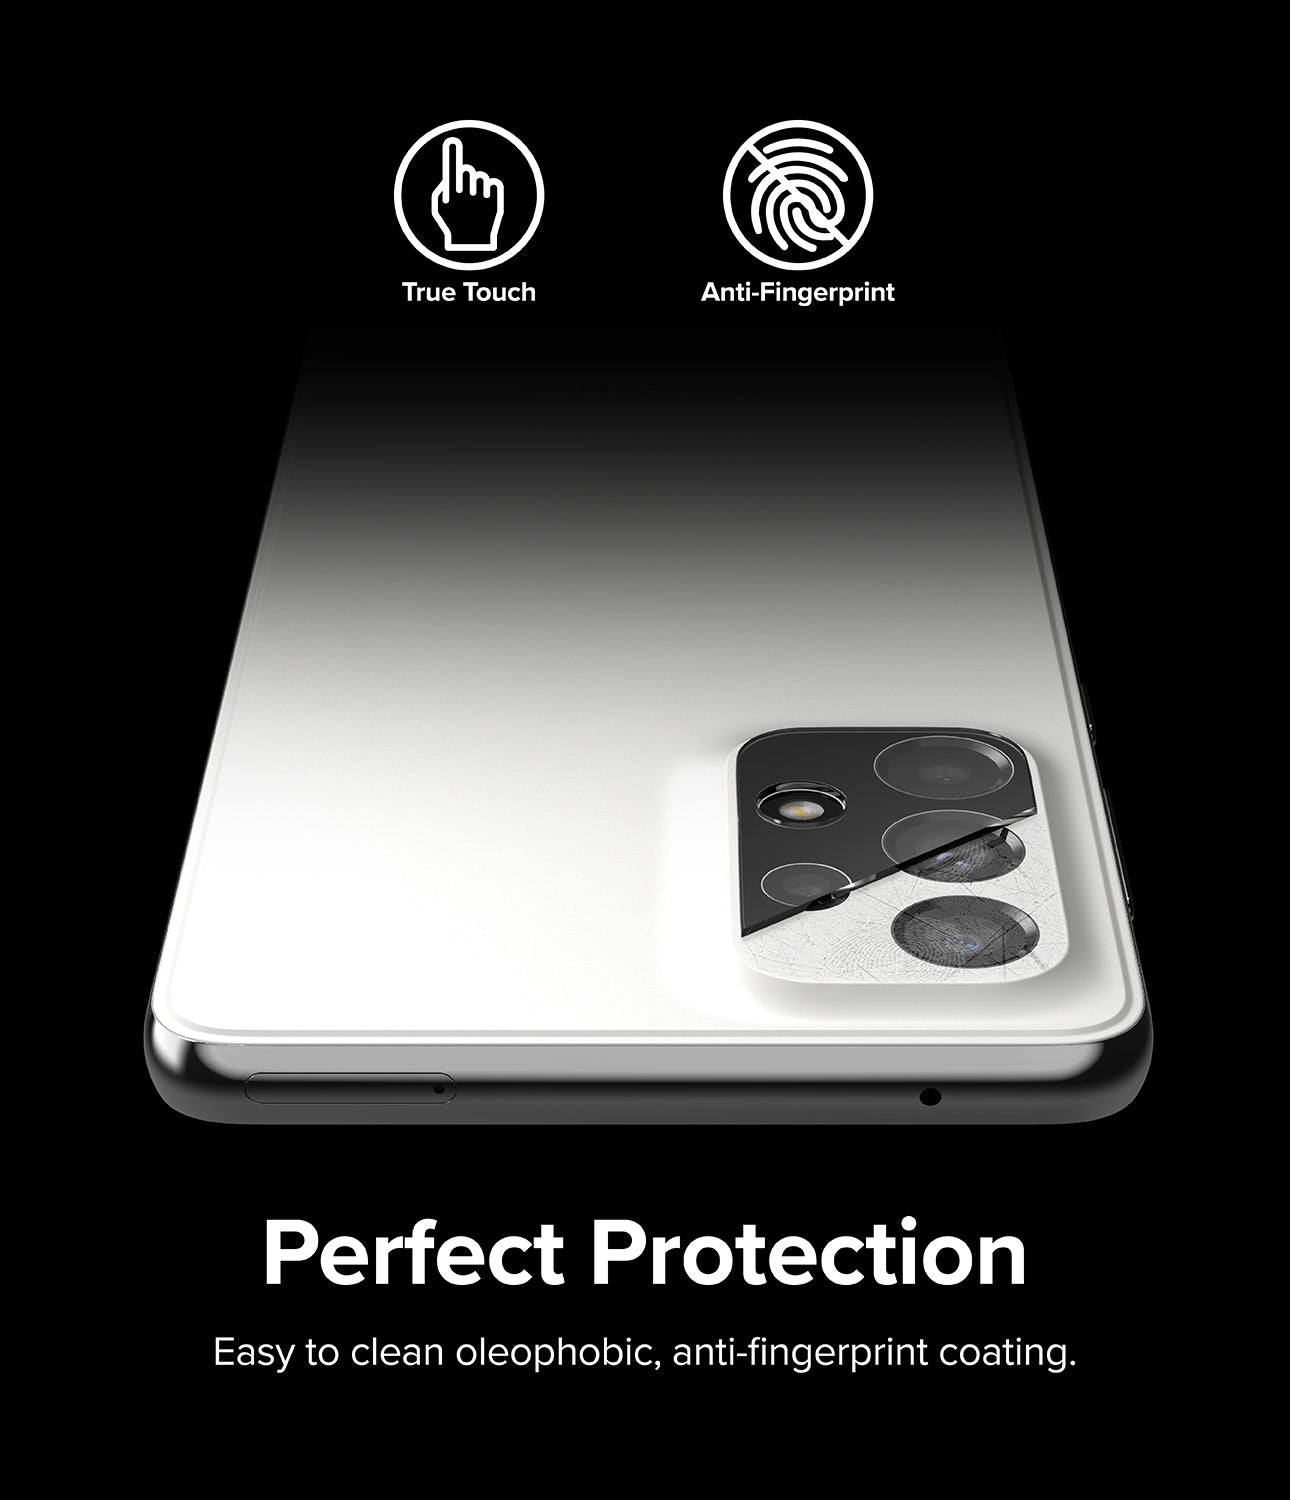 Camera Protector Glass Samsung Galaxy A33/A53/A73 Black